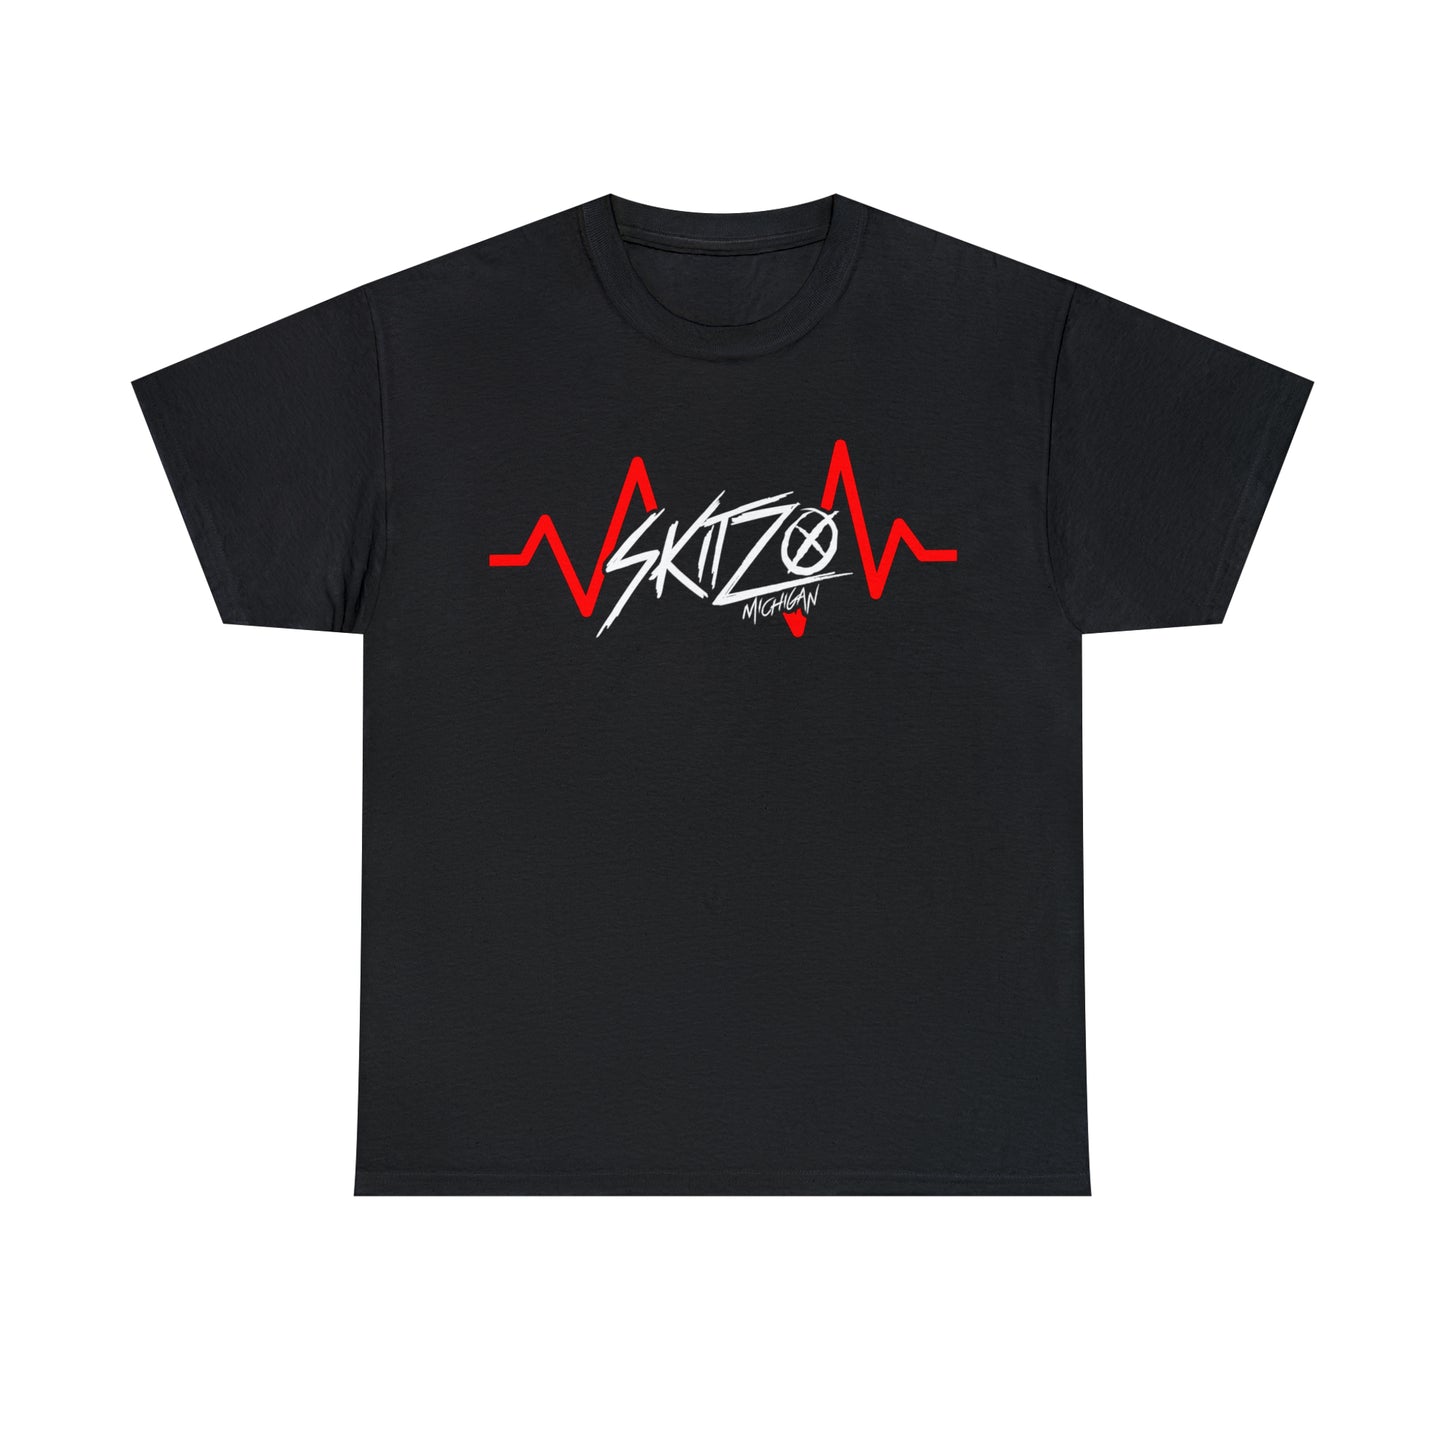 Skitzo "EKG" T-Shirt